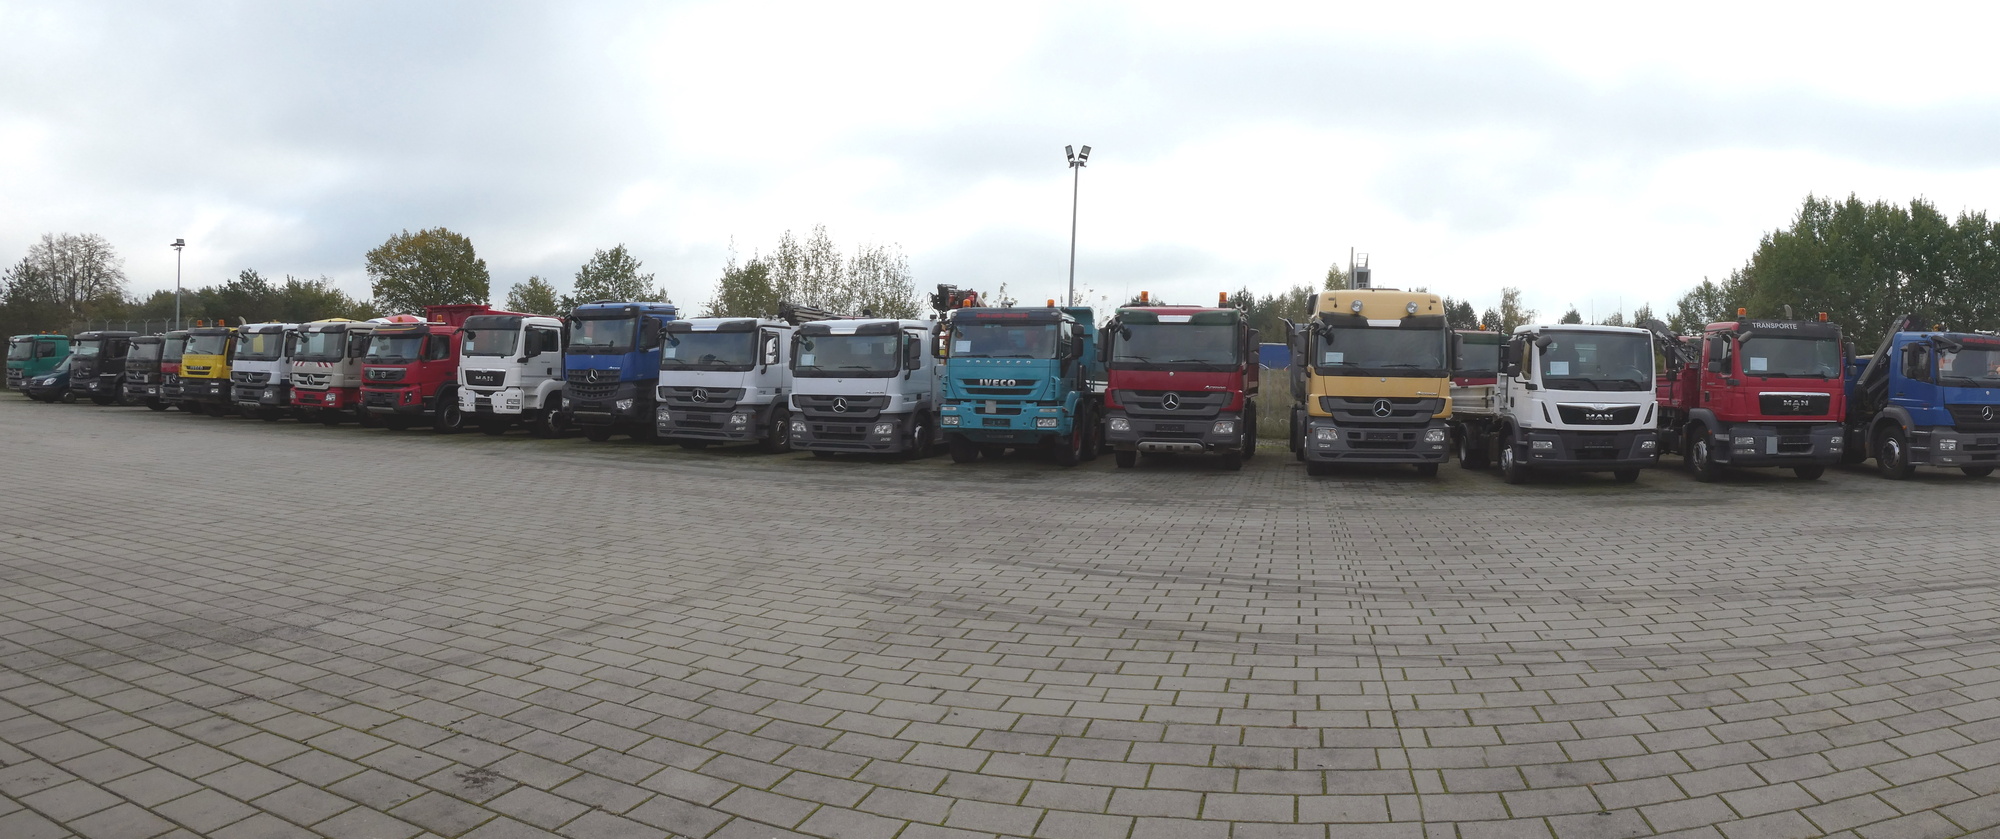 Henze Truck GmbH - myynti-ilmoitukset undefined: kuva Henze Truck GmbH - myynti-ilmoitukset undefined